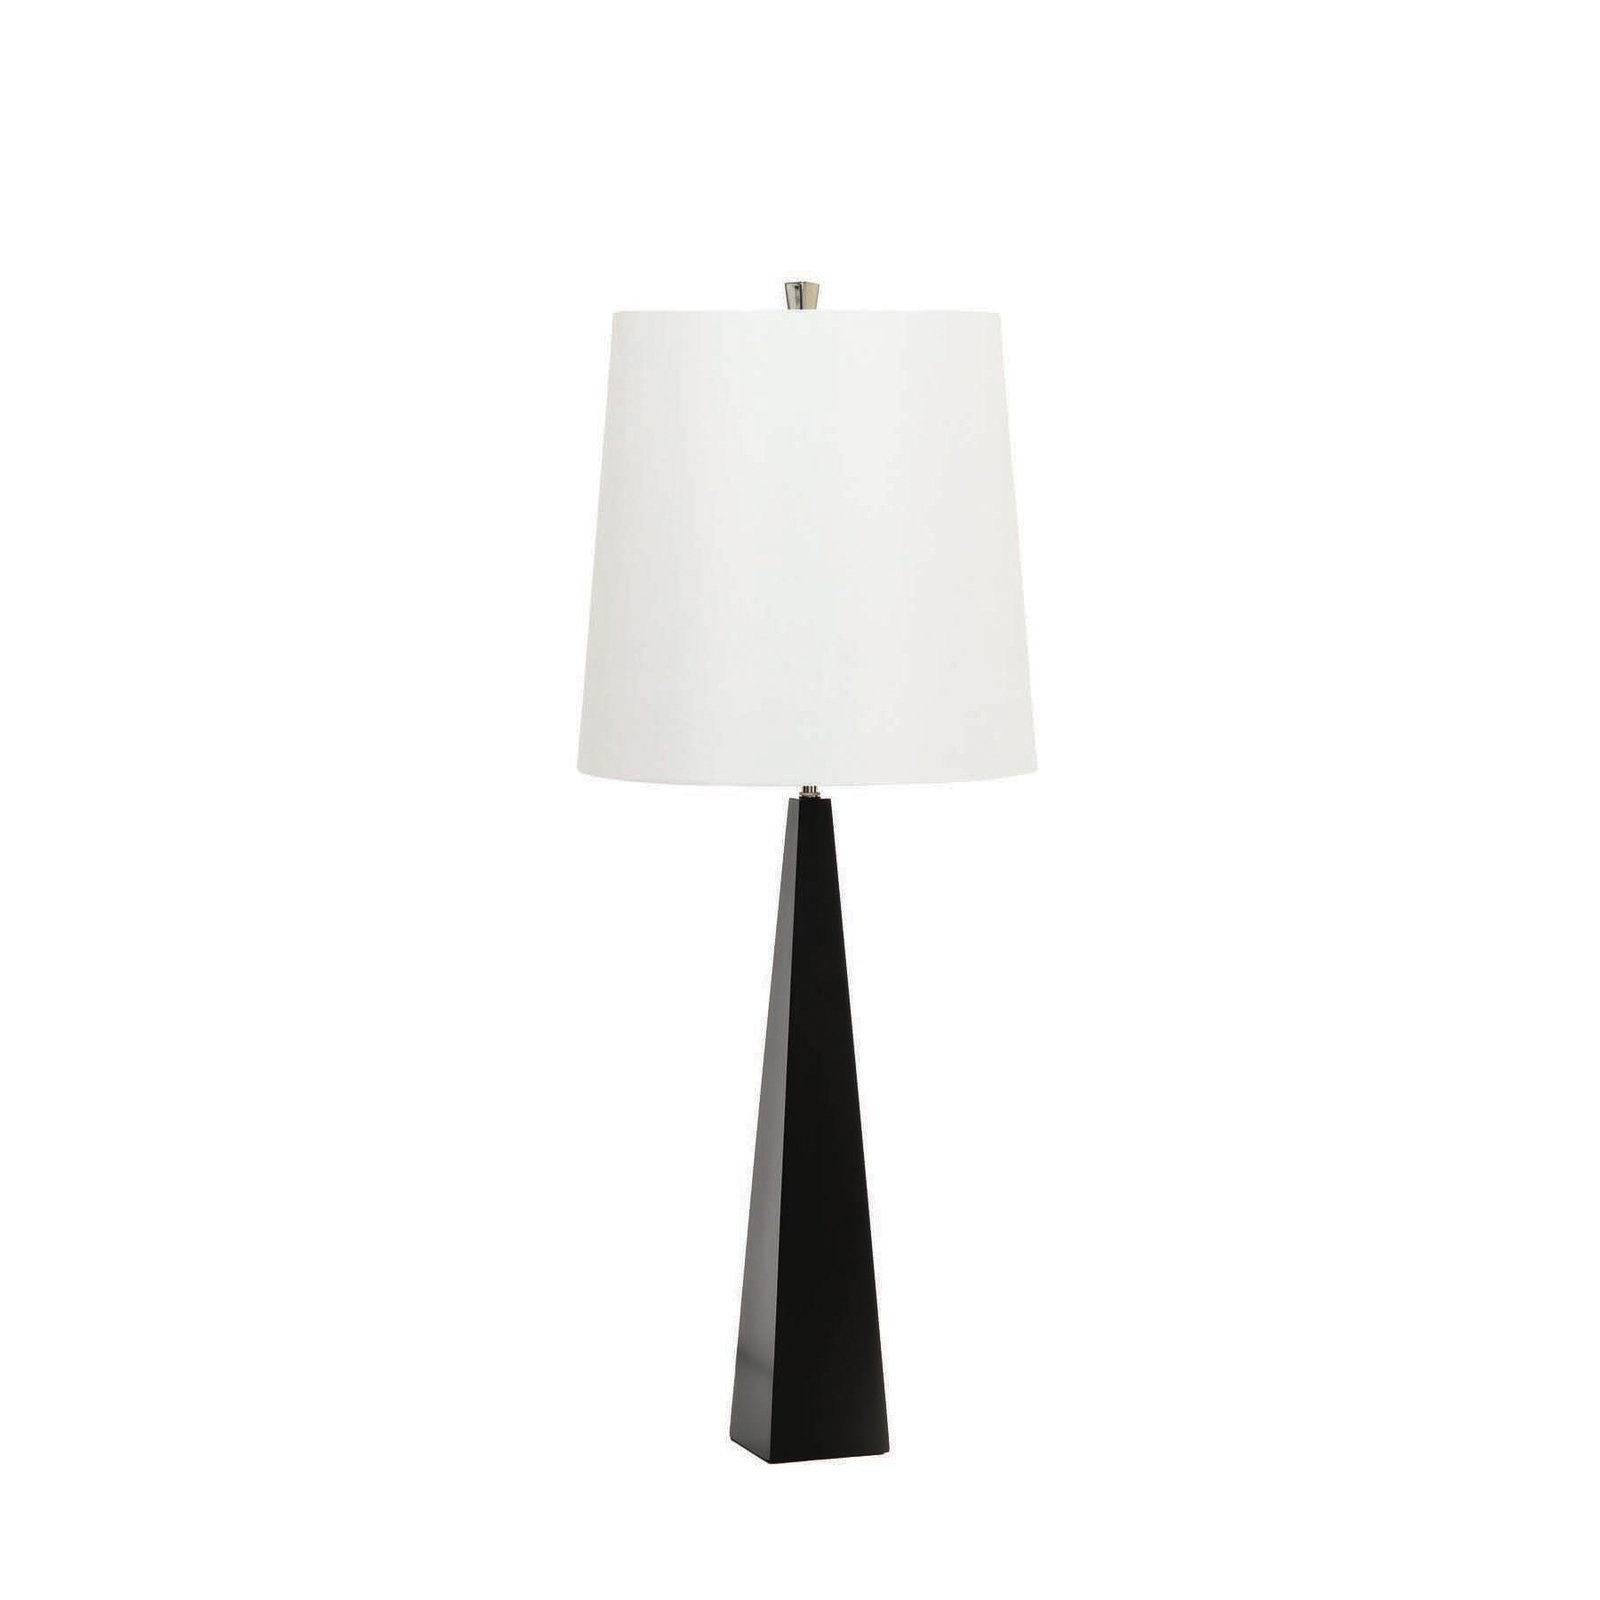 Ascent bordslampa, svart, vit skärm